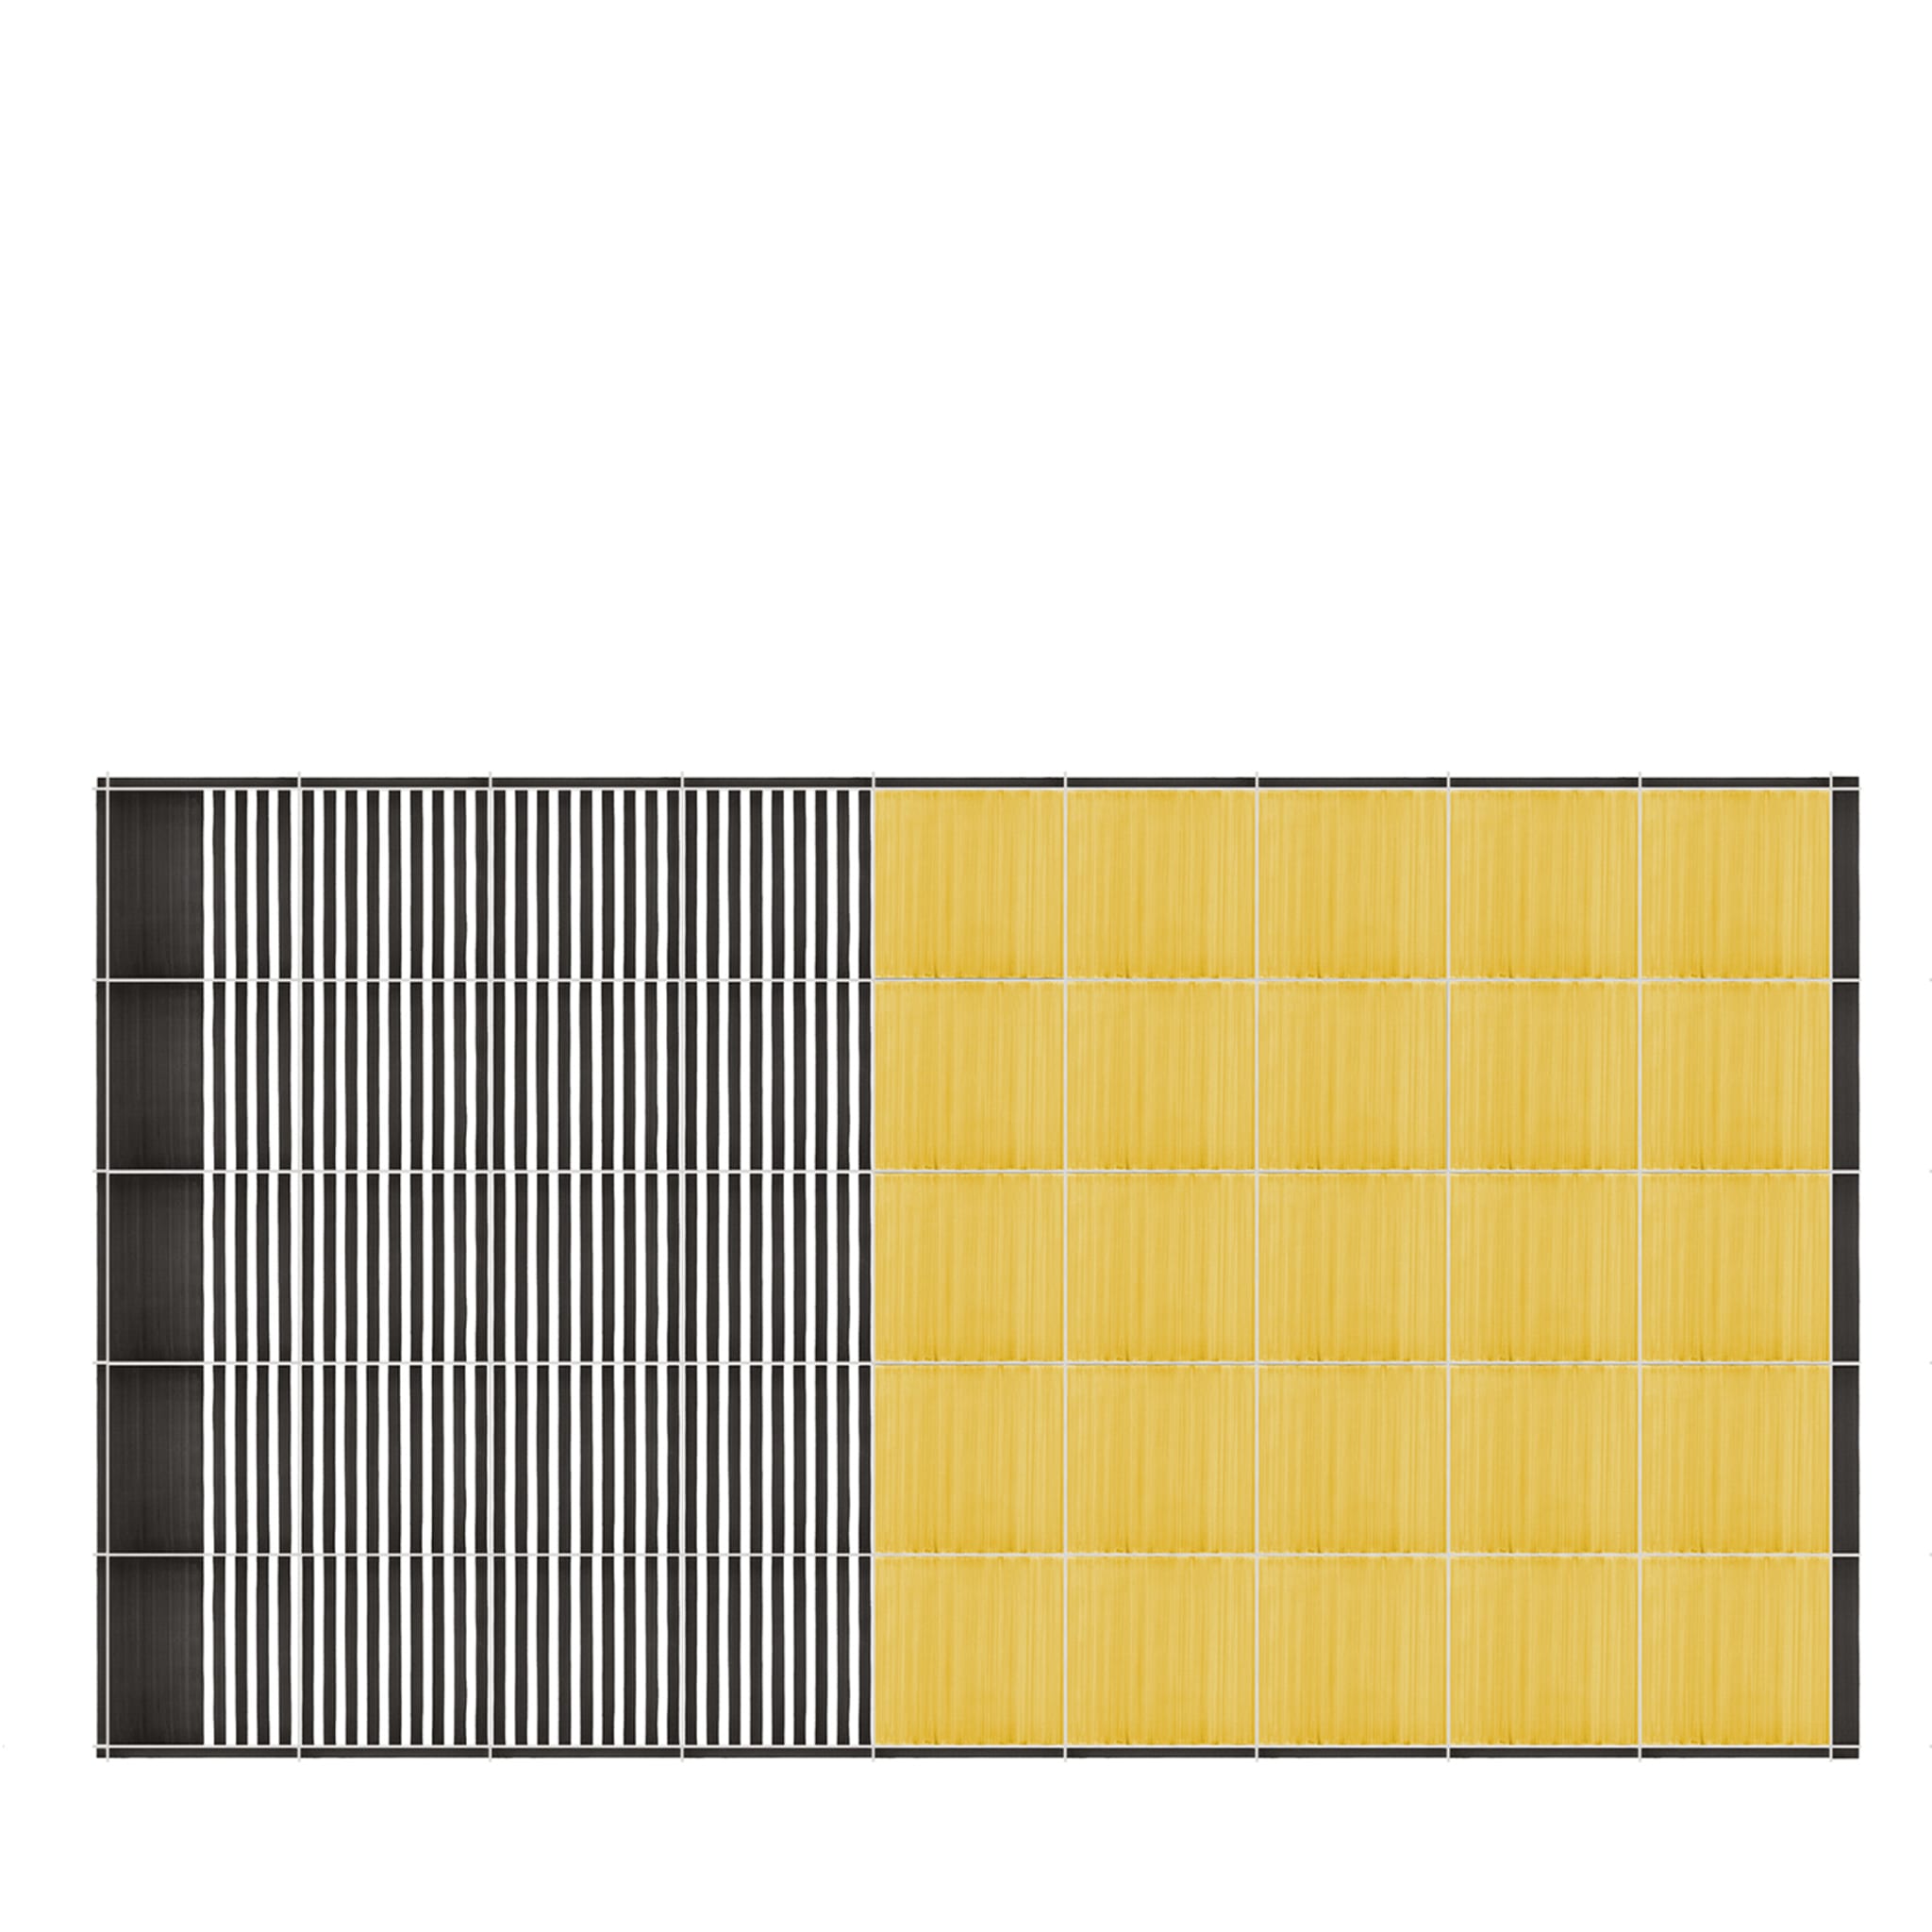 Carpet Yellow and Striped Ceramic Composition by Giuliano Andrea dell’Uva 220 x 140 - Main view